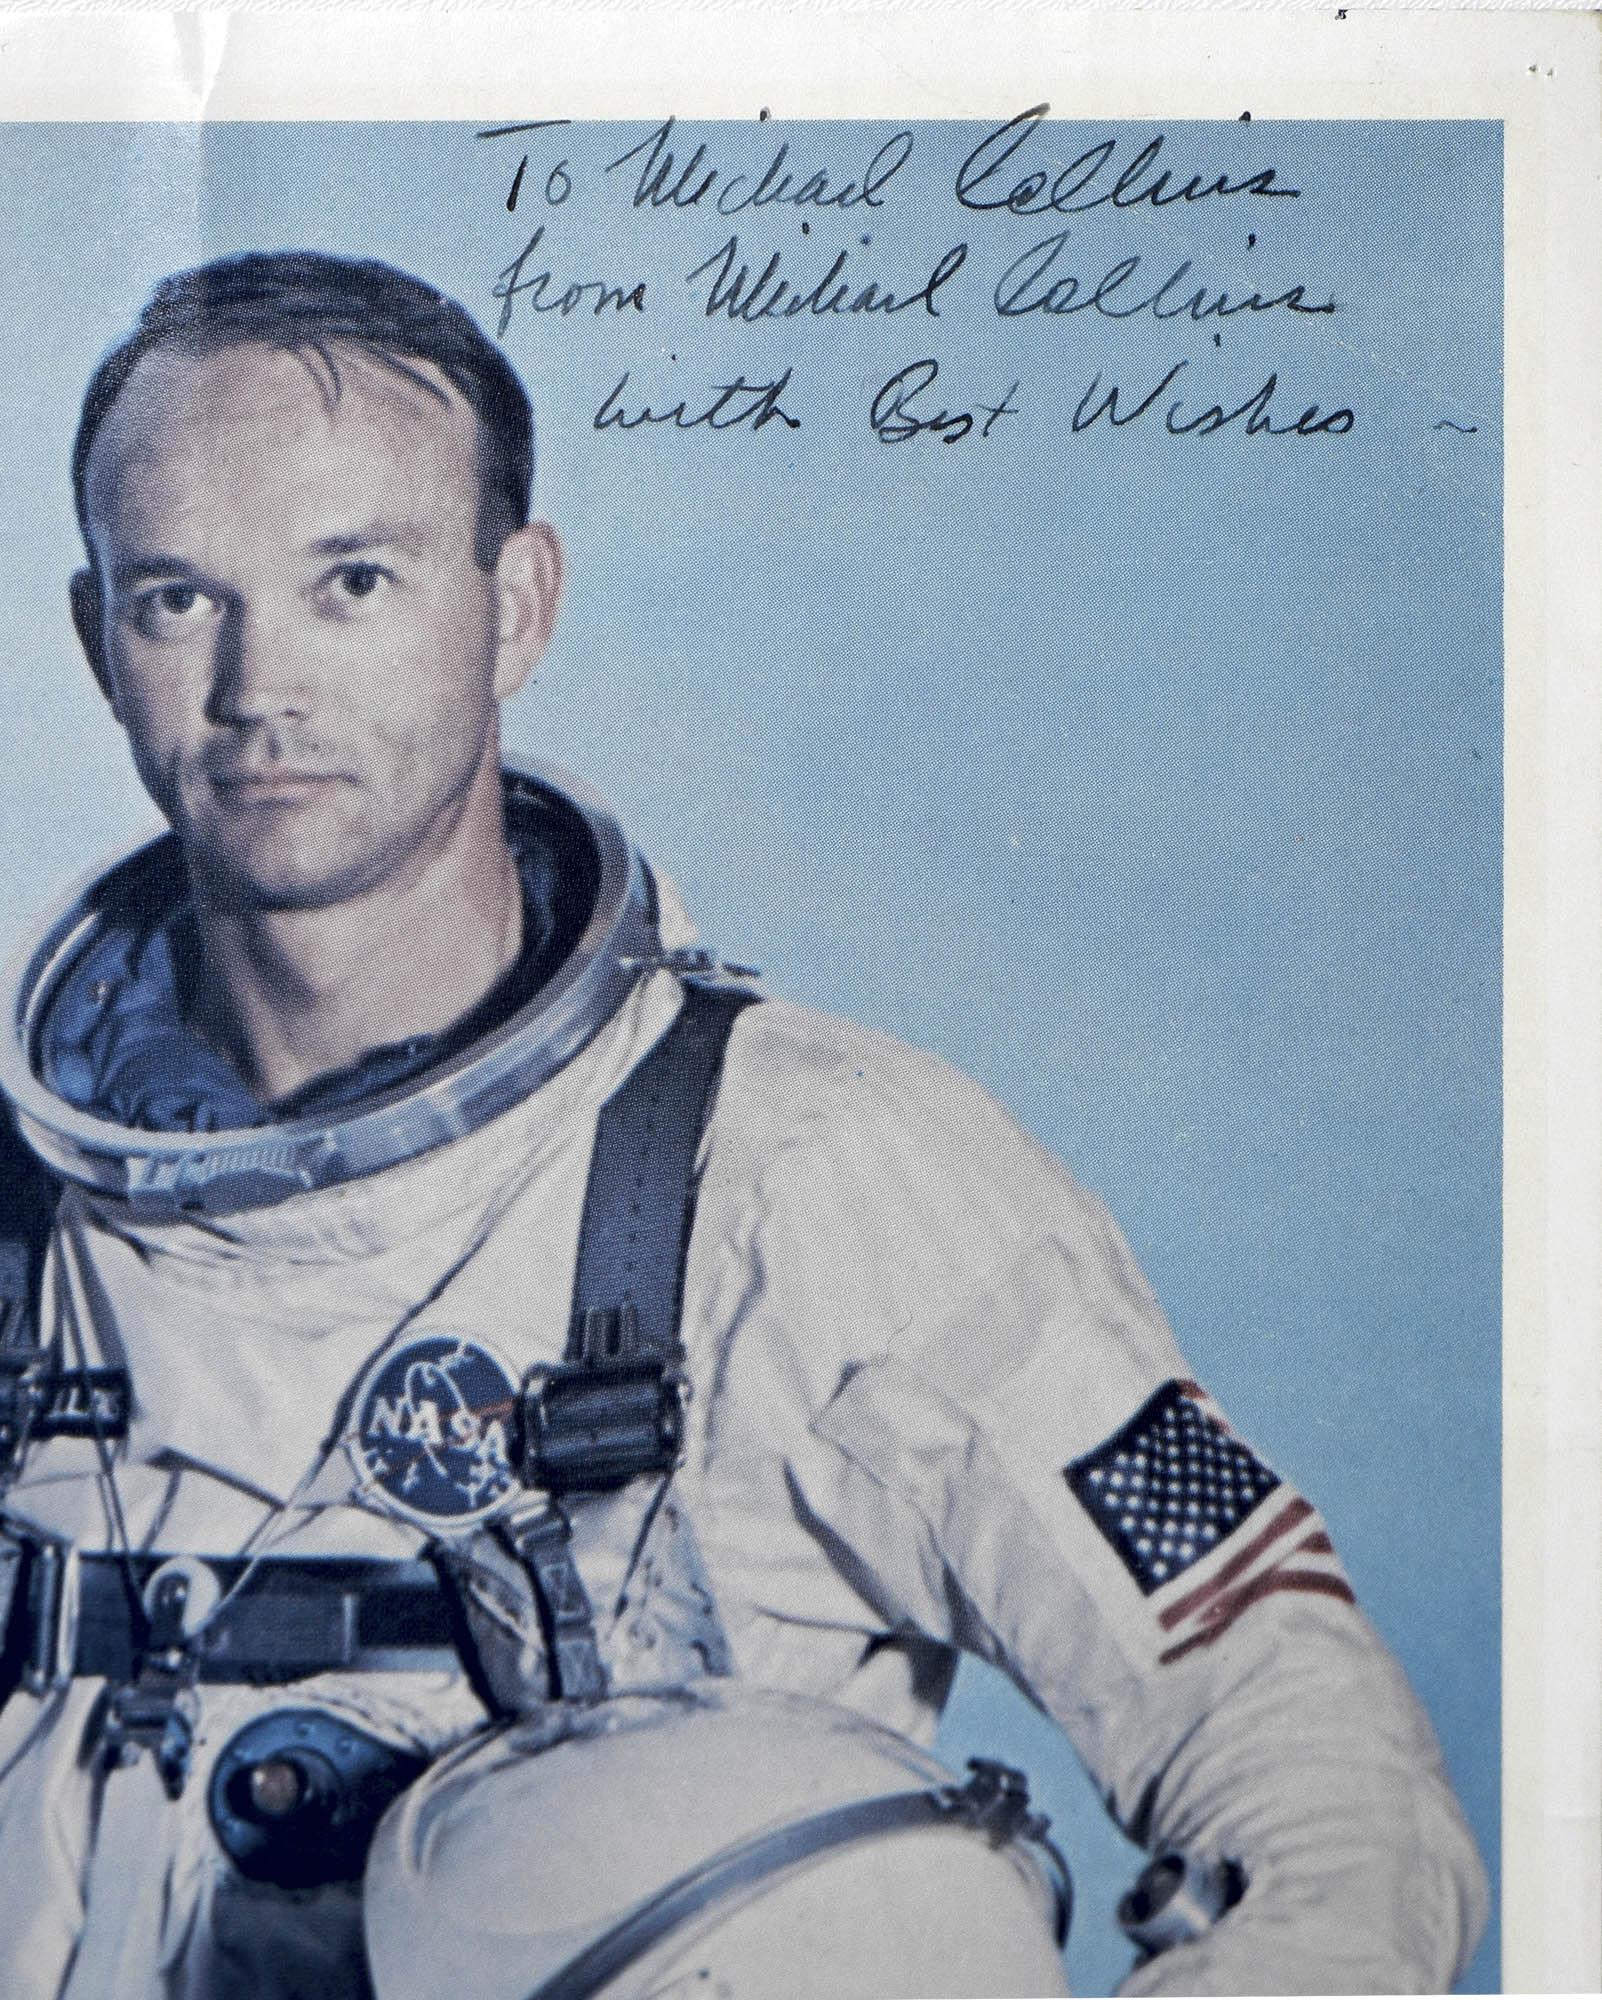 Michael Collins, NASA